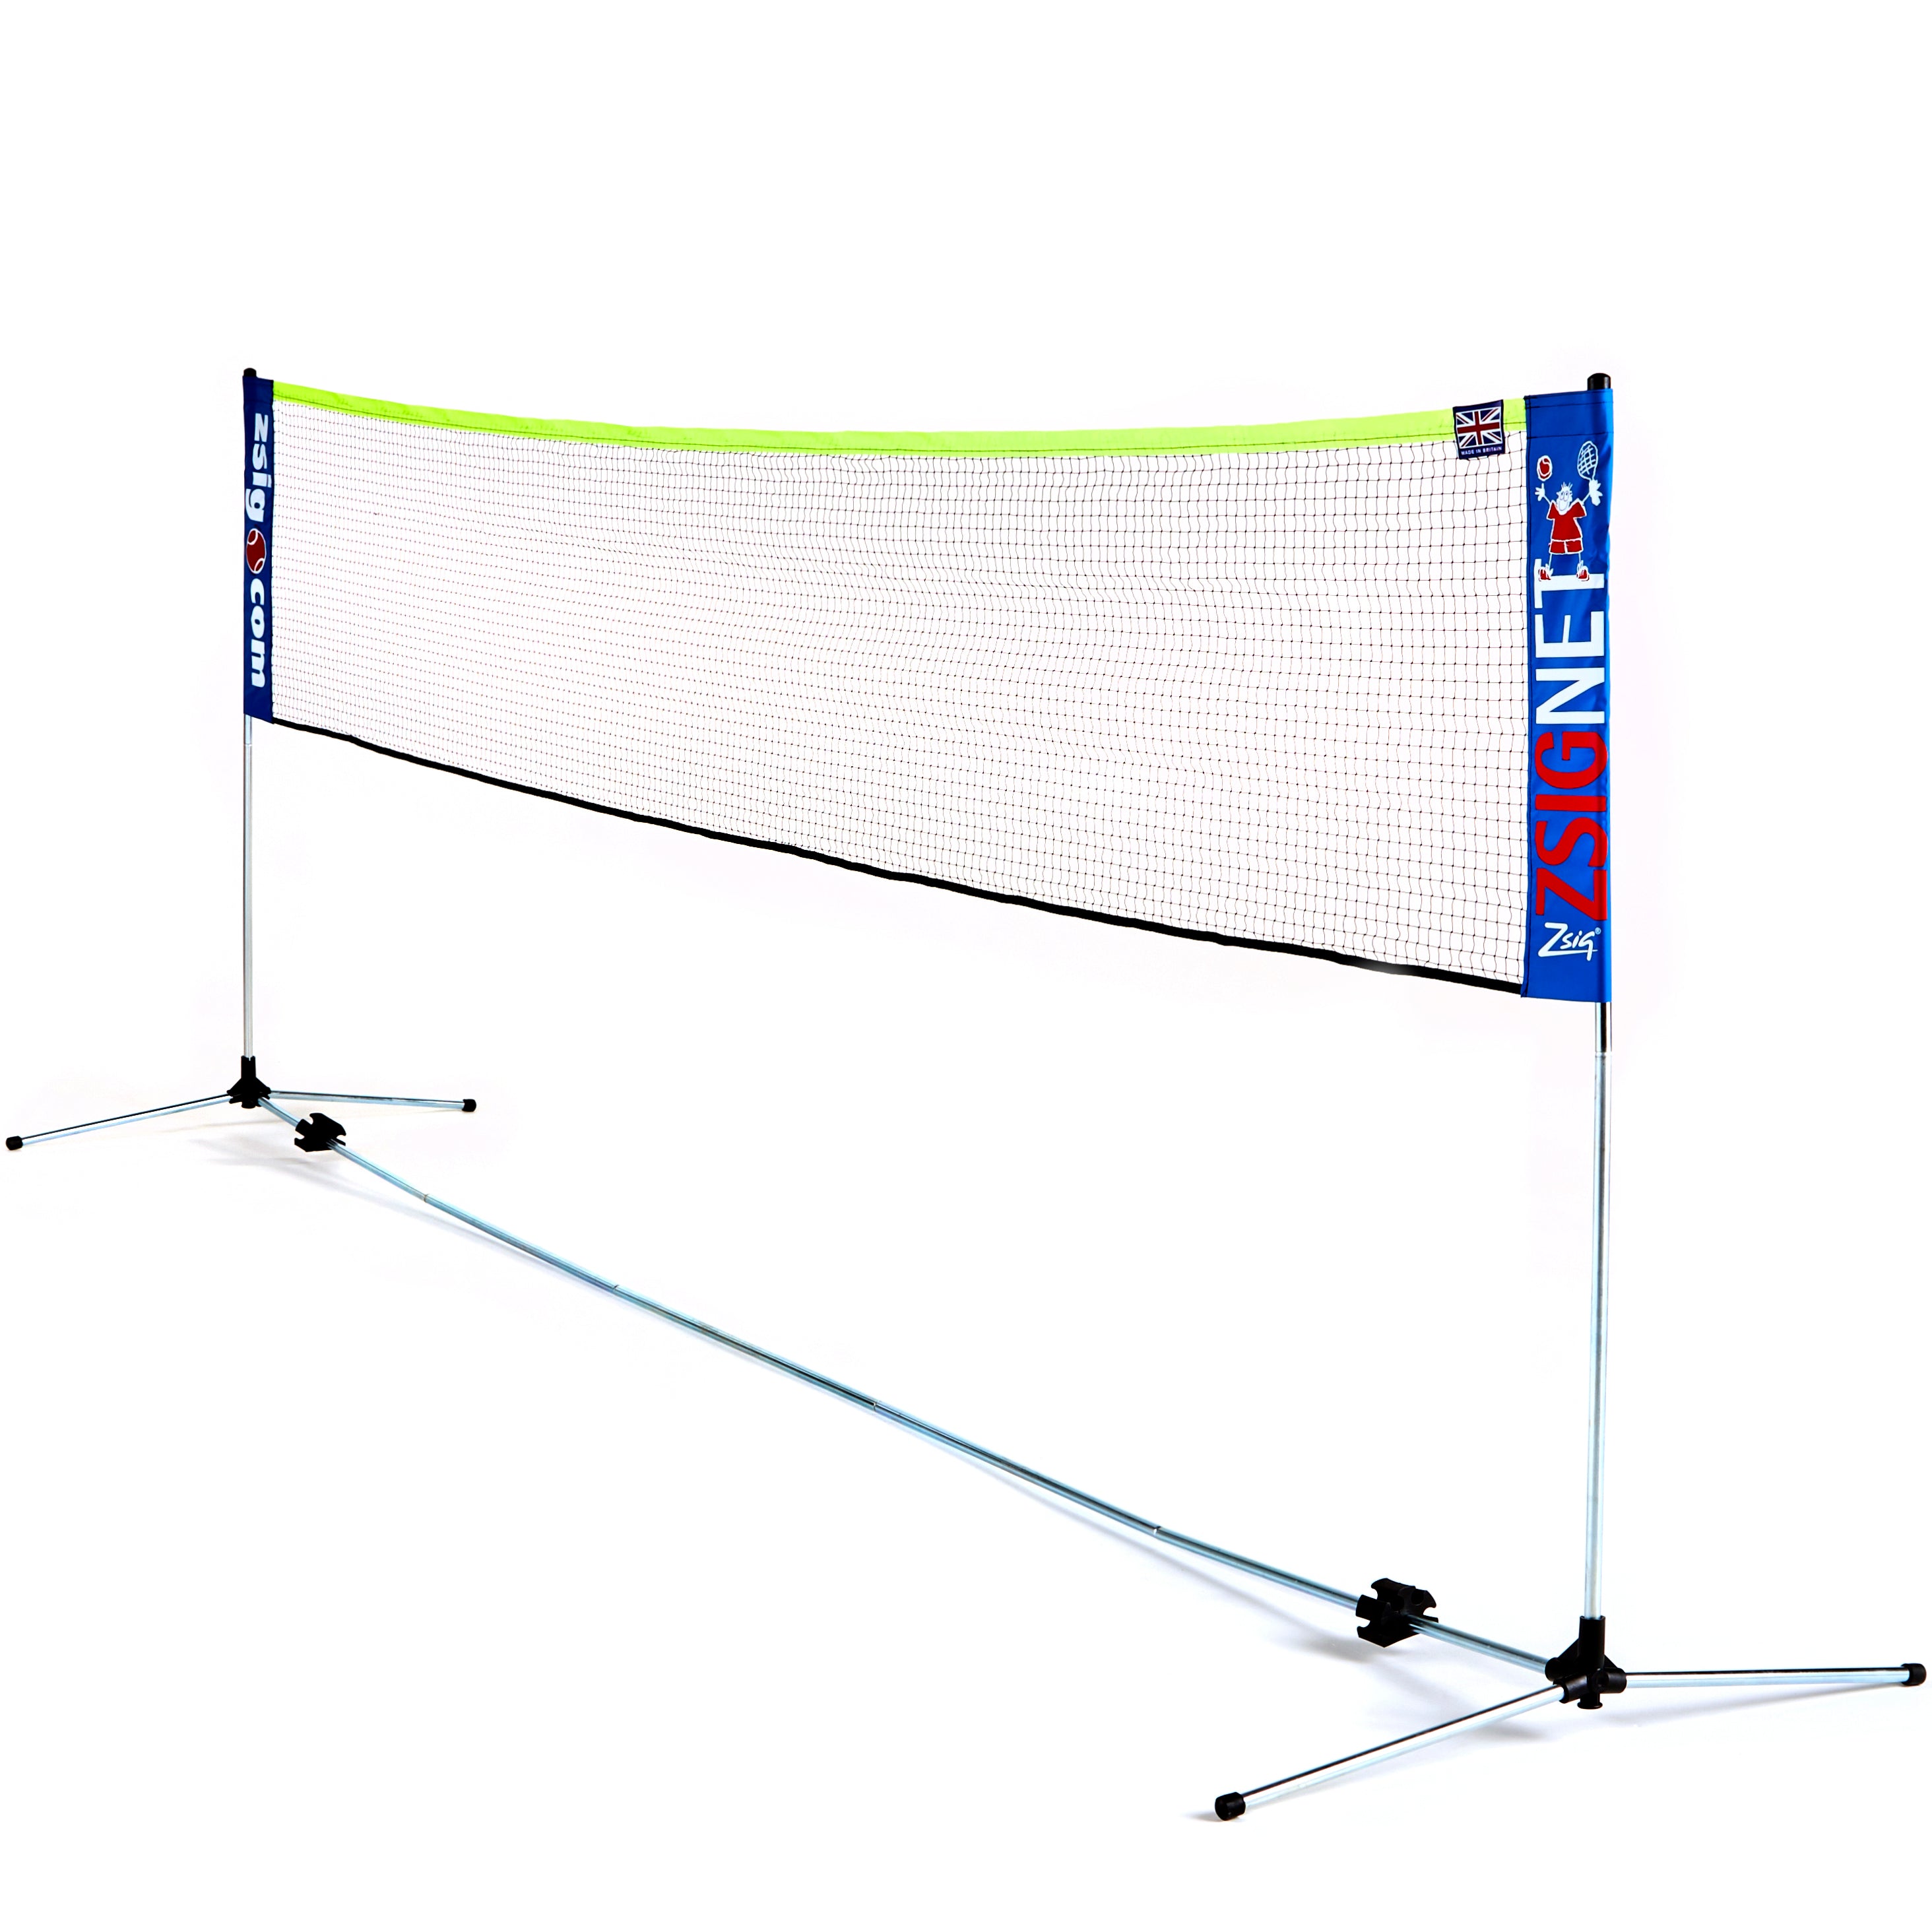 Zsig's 4.3m Badminton Net system assembled